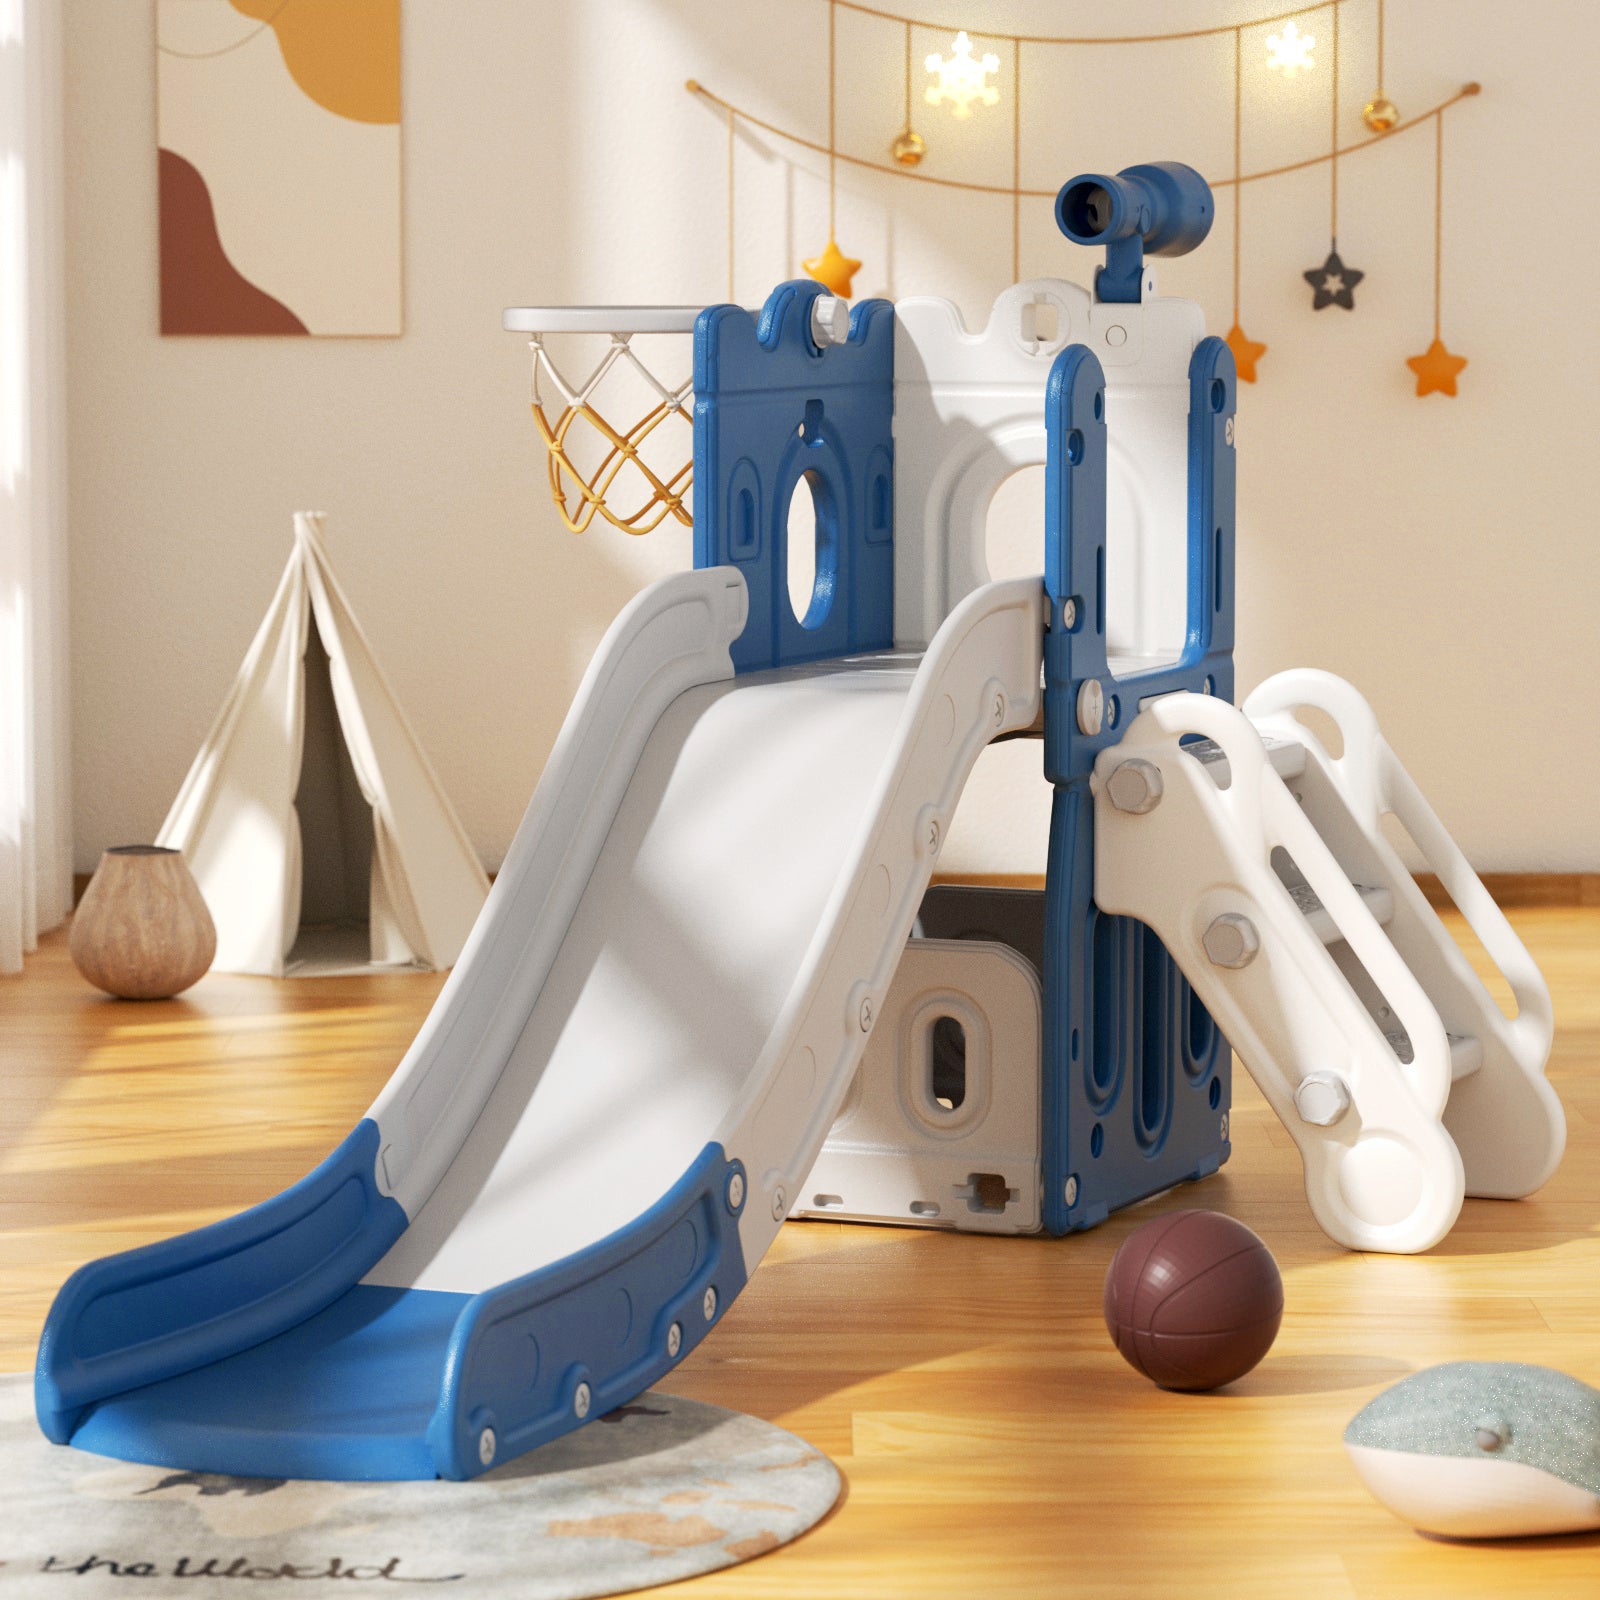 XJD 5 in 1 Toddler Slide Set In Blue Climber Slide for Toddlers Age 1-